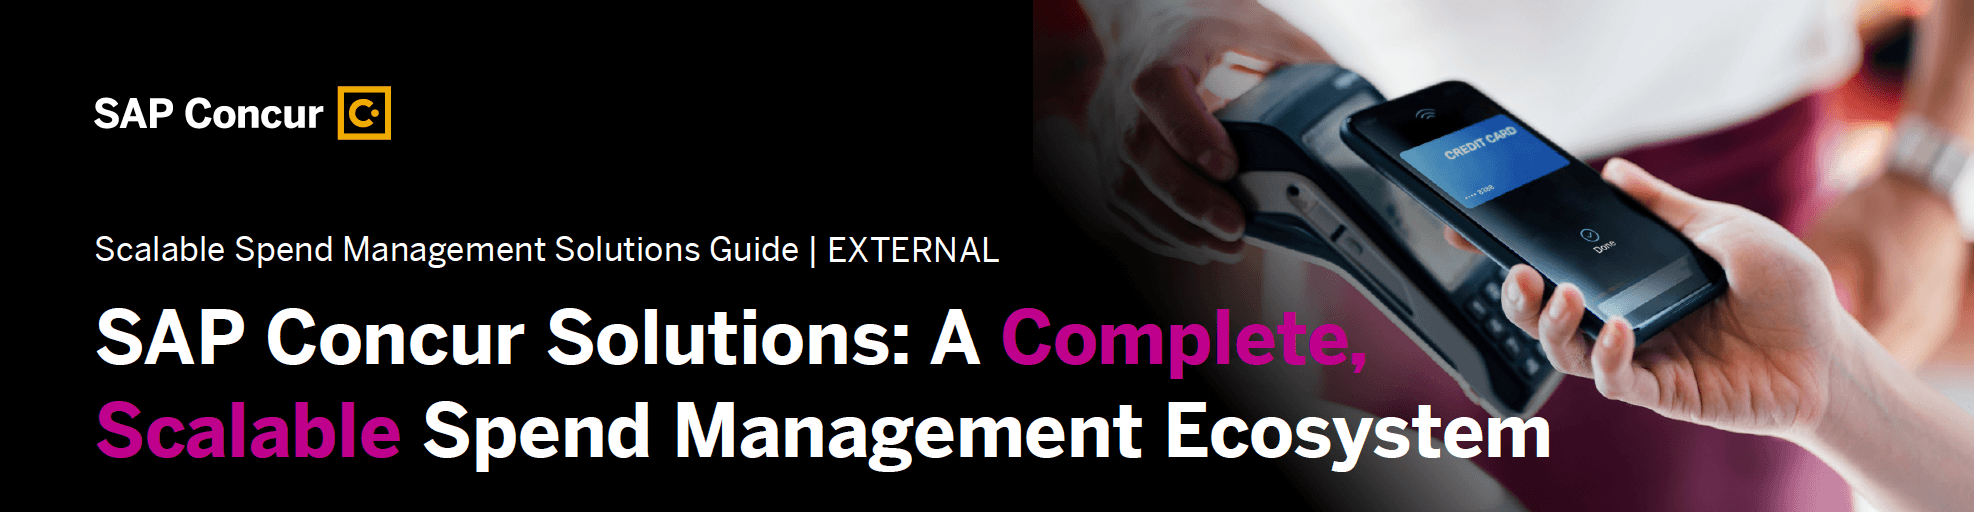 SAP Concur Solutions: A Complete, Scalable Spend Management Ecosystem